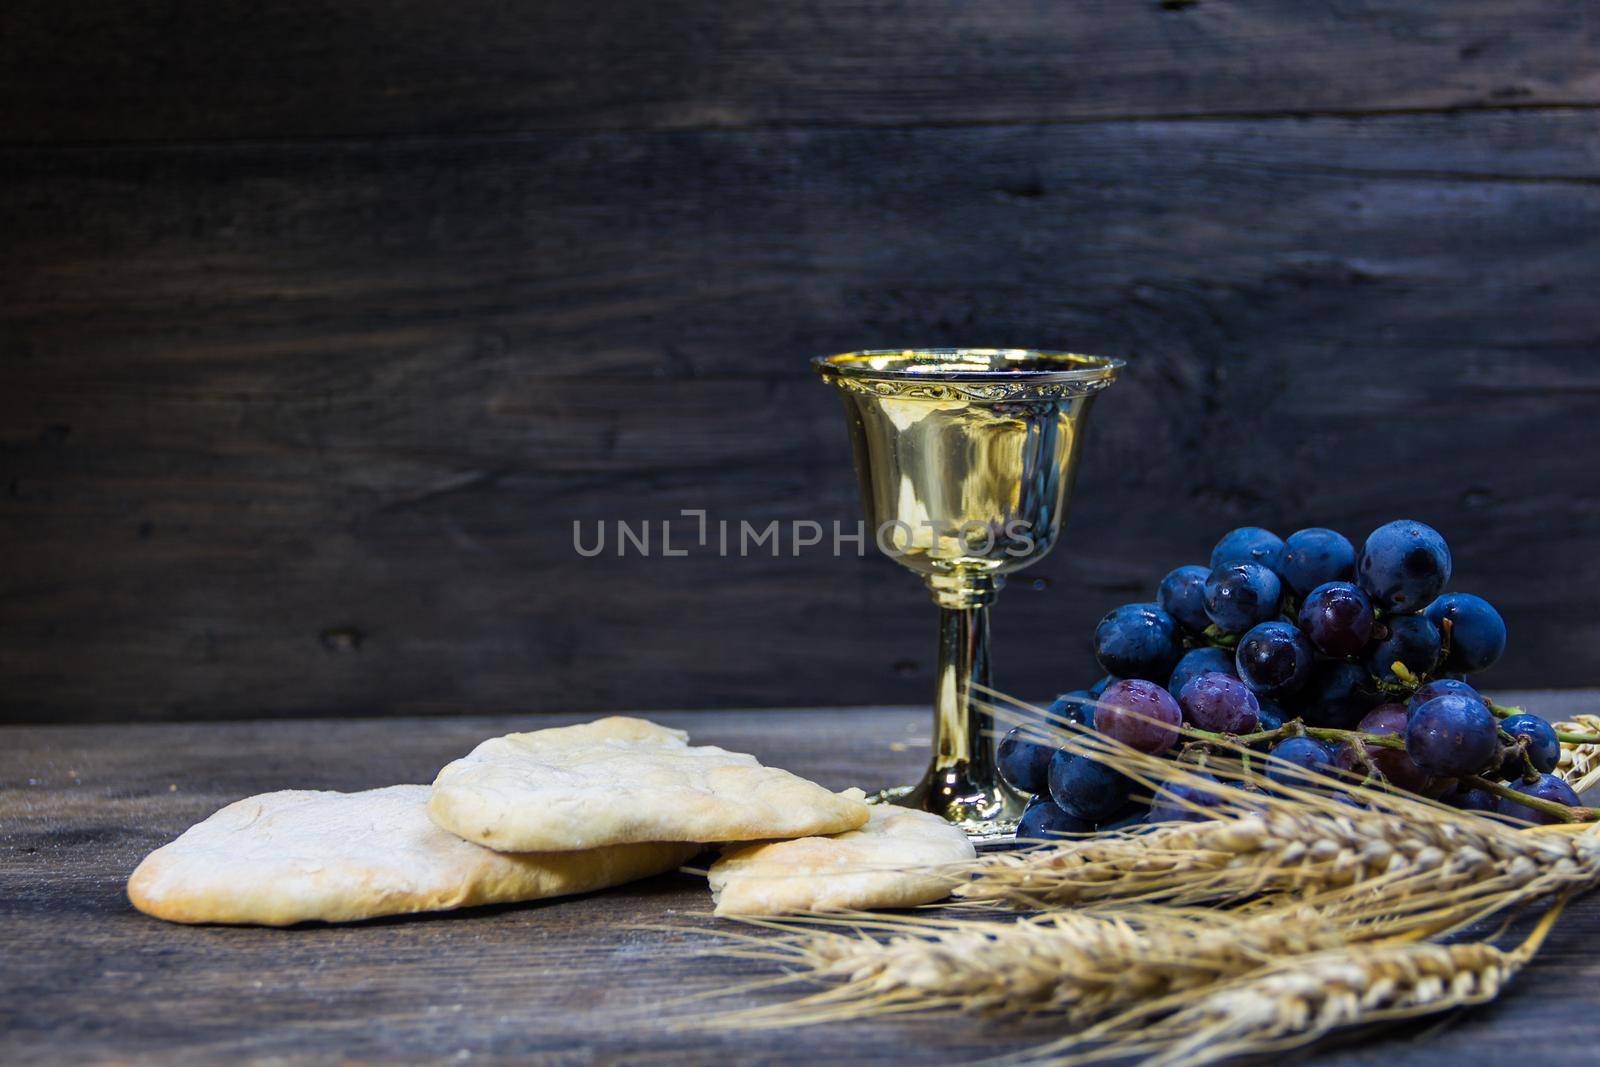 sour bread, wine, grapes and wheat symbol of Christian communion by GabrielaBertolini